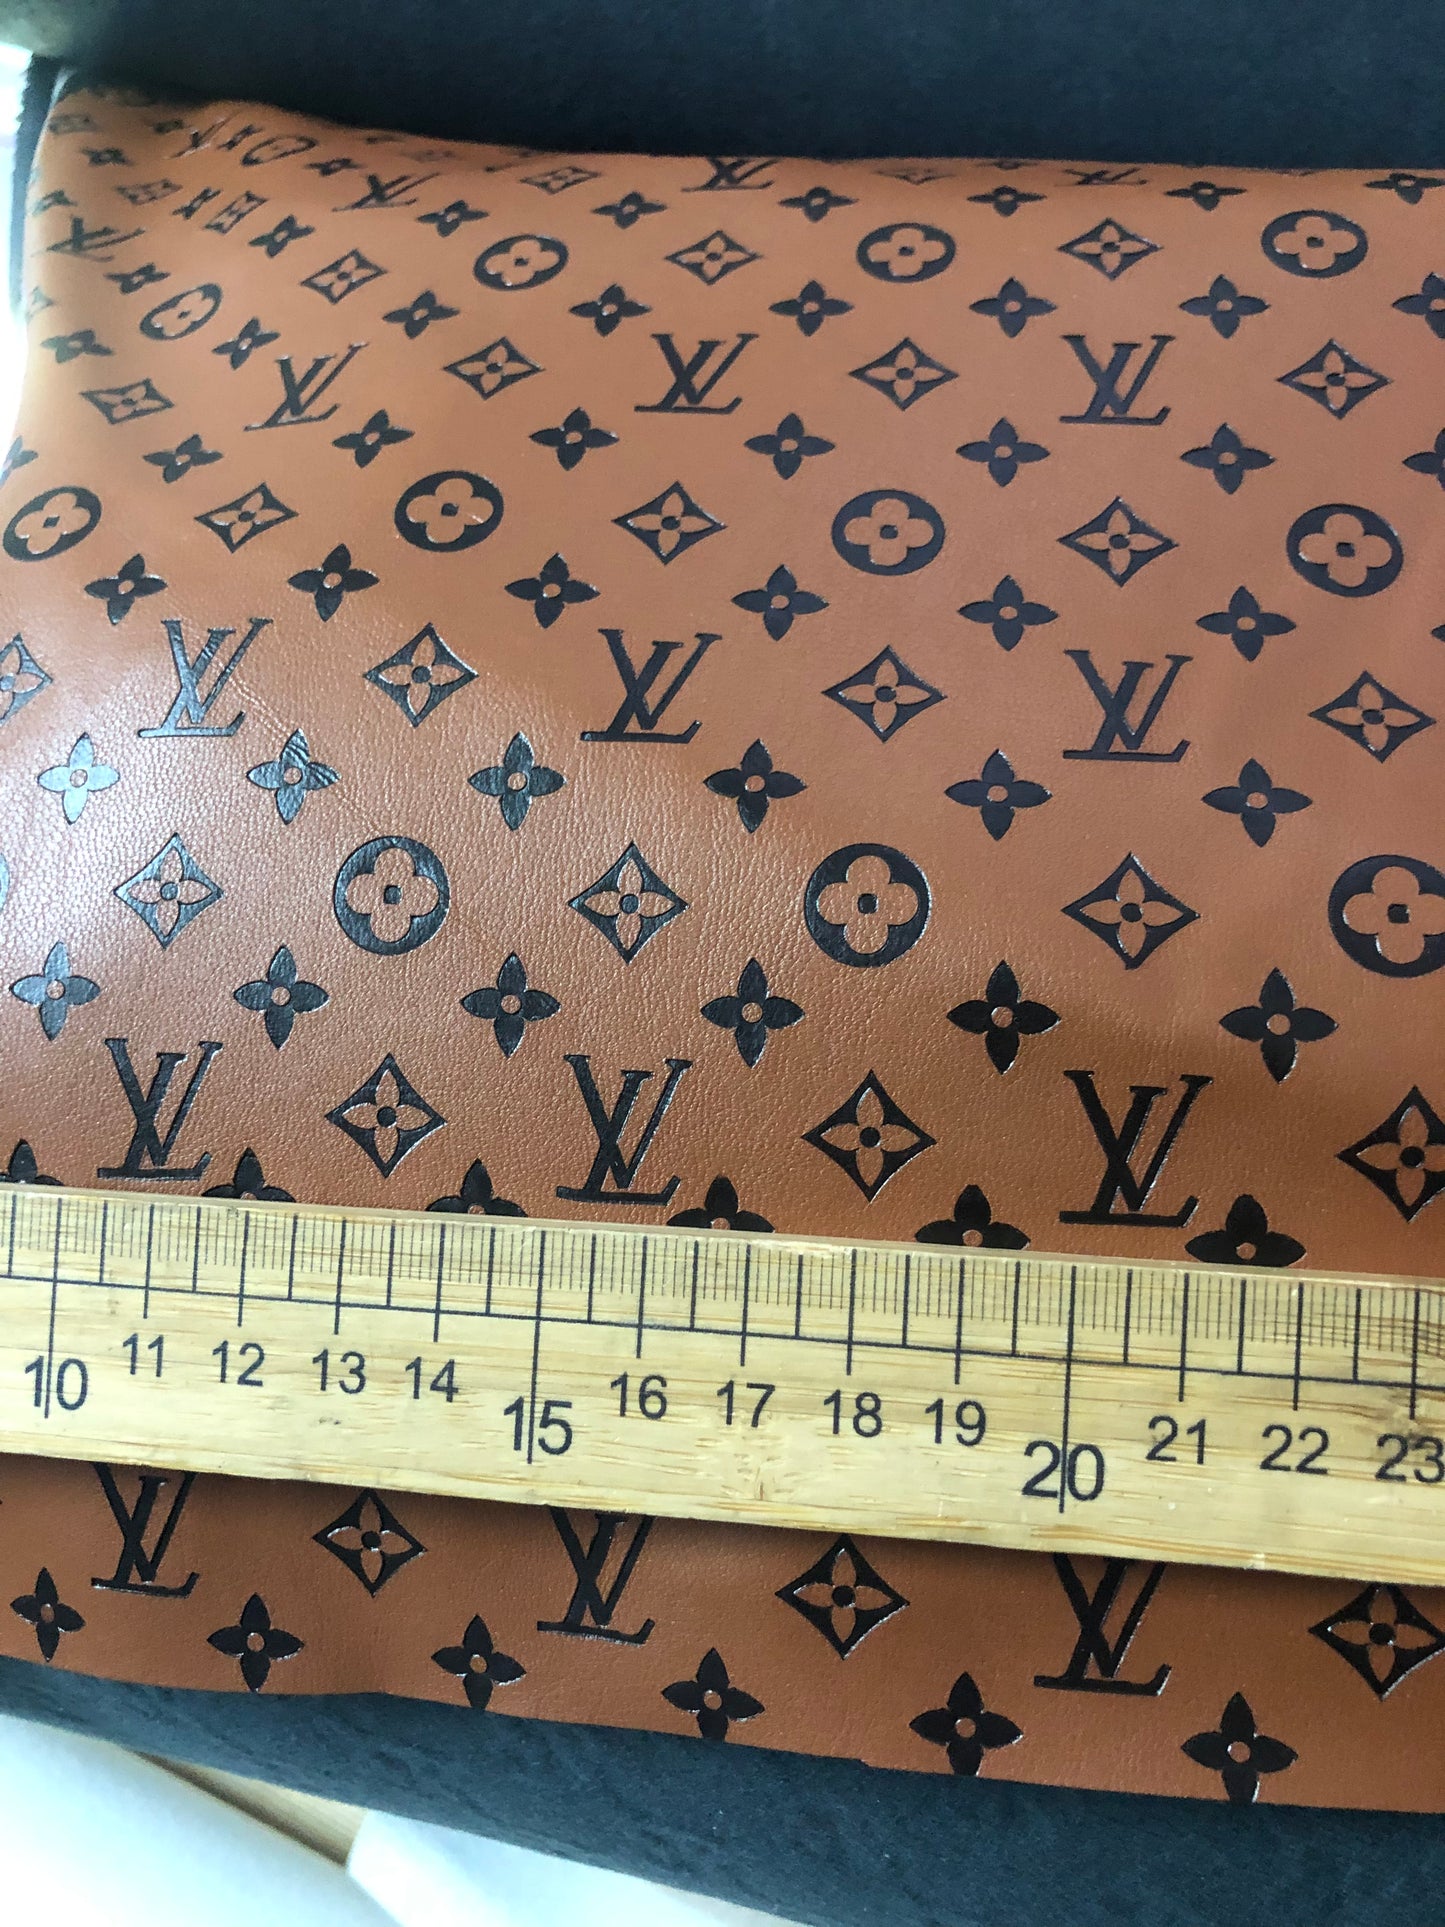 Classic Brown Embossed LV Fabric Vinyl Leather for Custom Bag Upholstery